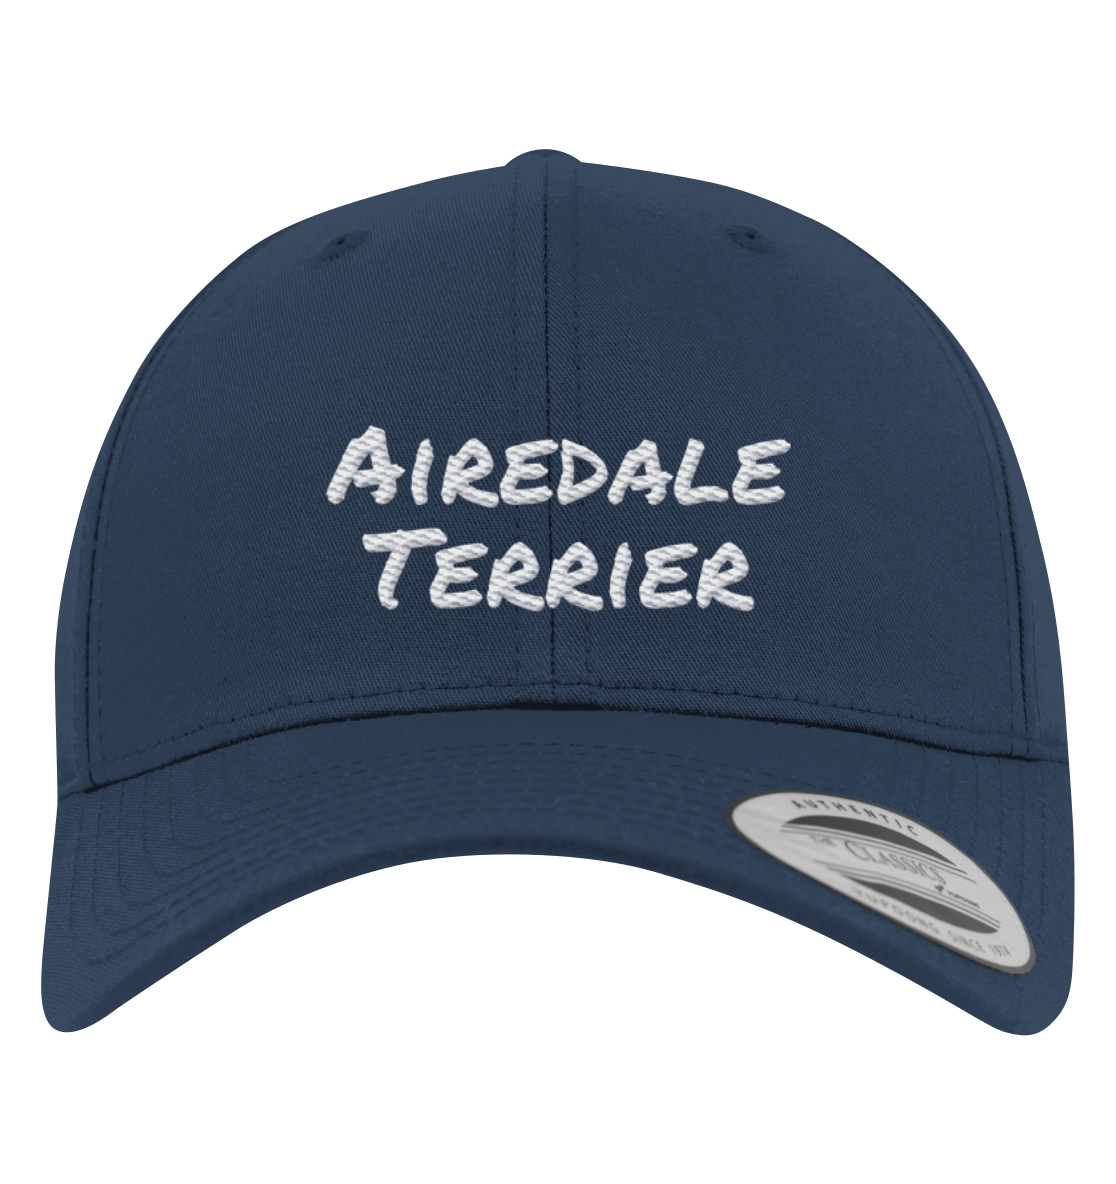 Airedale Terrier - Premium Baseball Cap